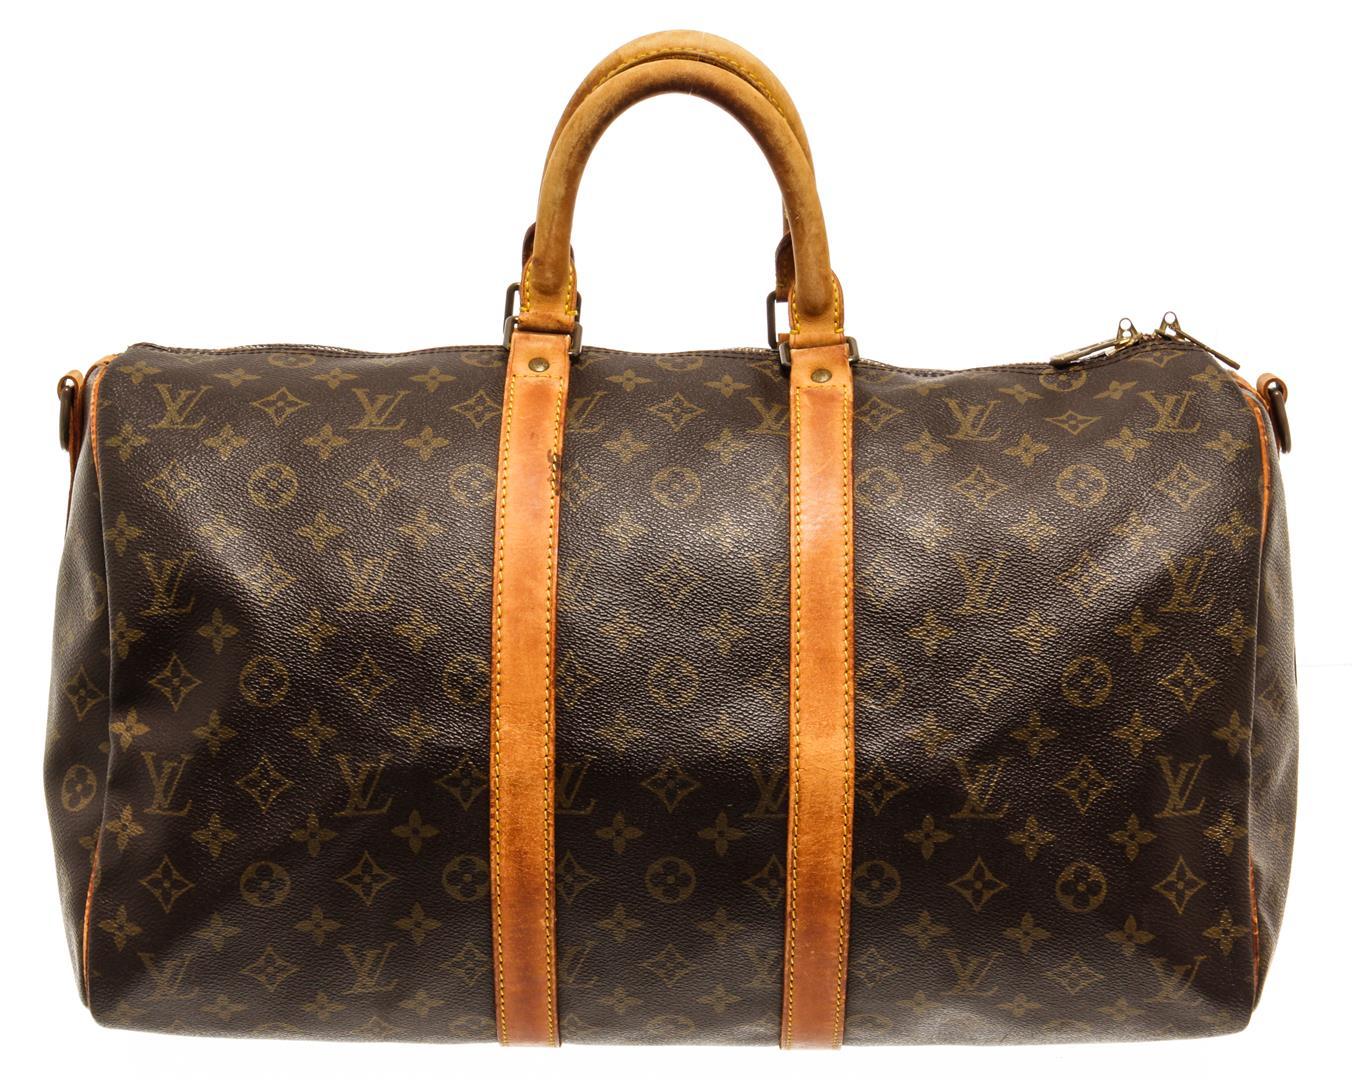 Louis Vuitton Keepall 45 cm Bandouliere Duffel Bag